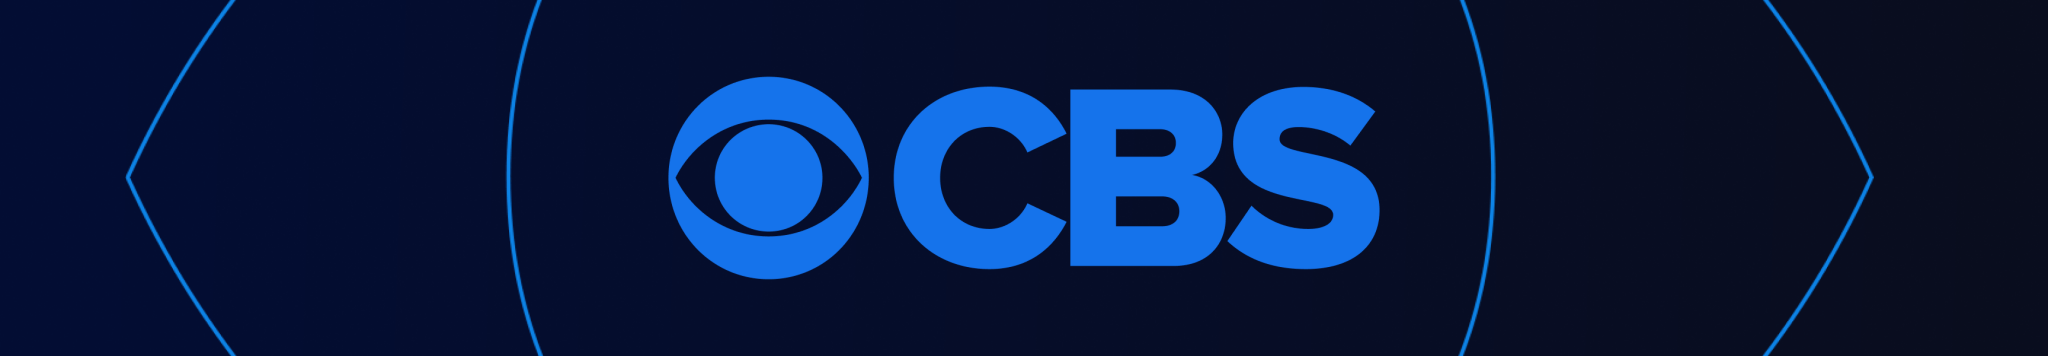 CBS Entertainment Hogar y oficina